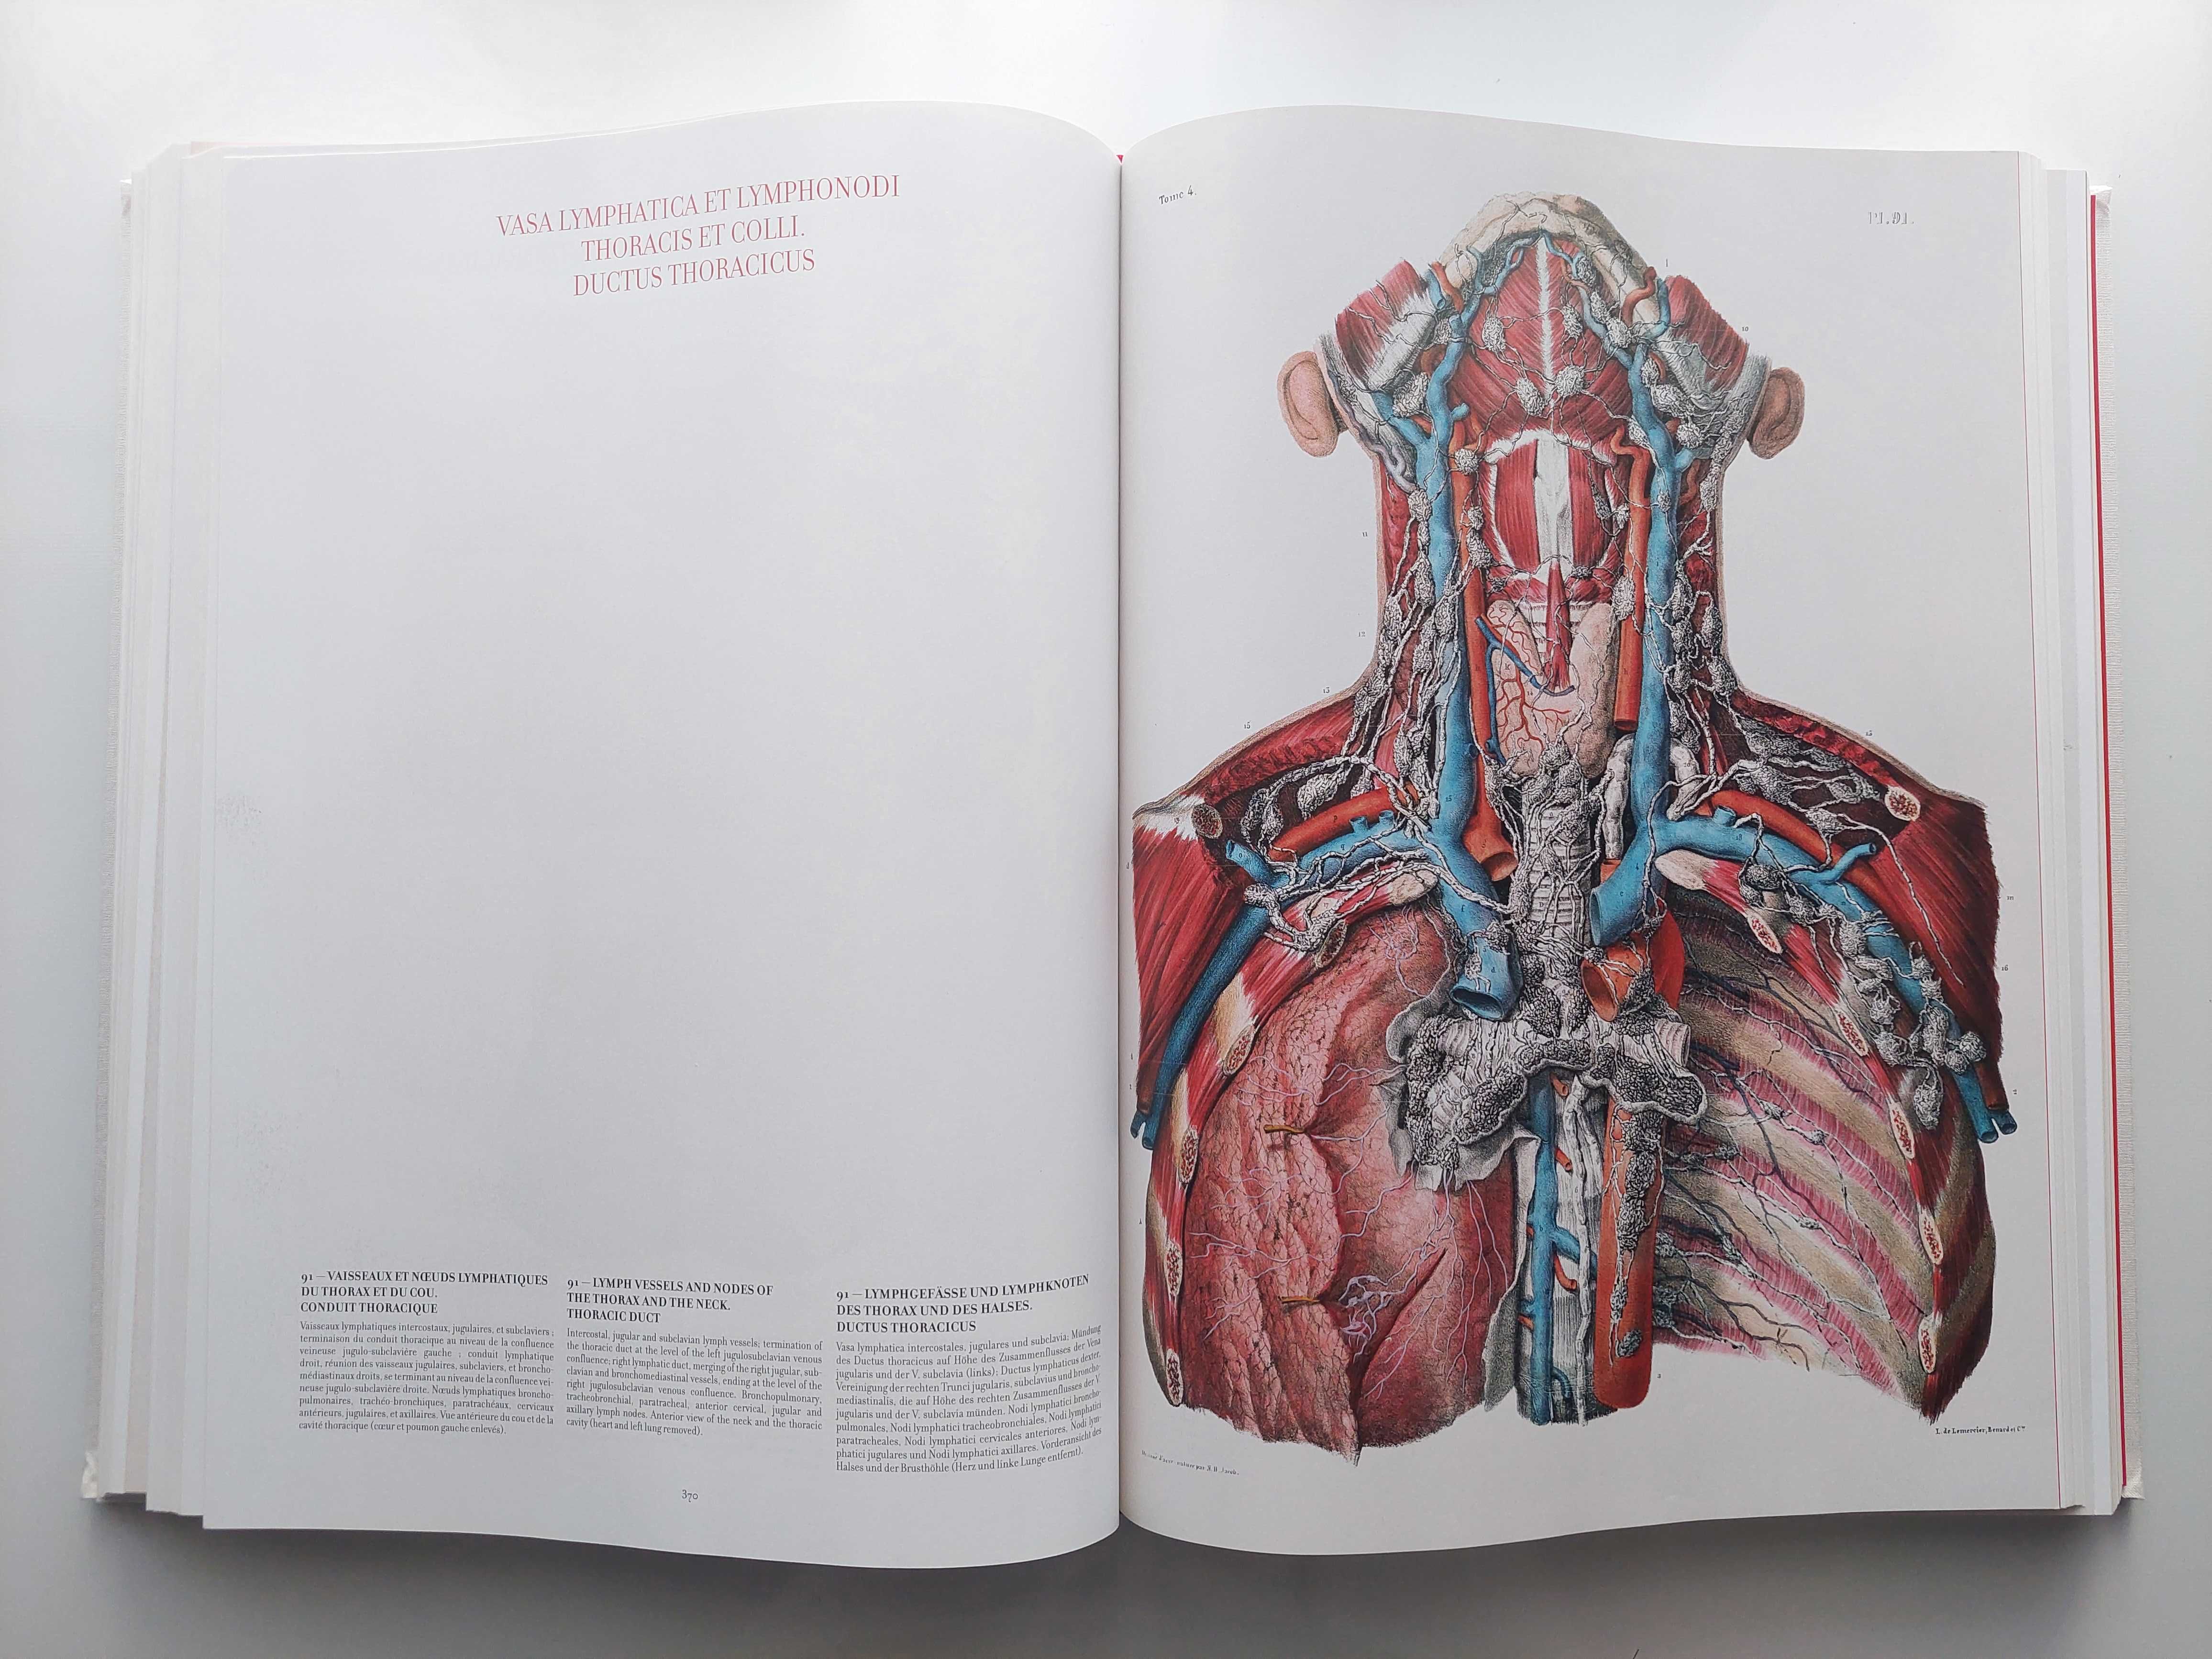 Bourgery. Atlas de anatomie și chirurgie umană